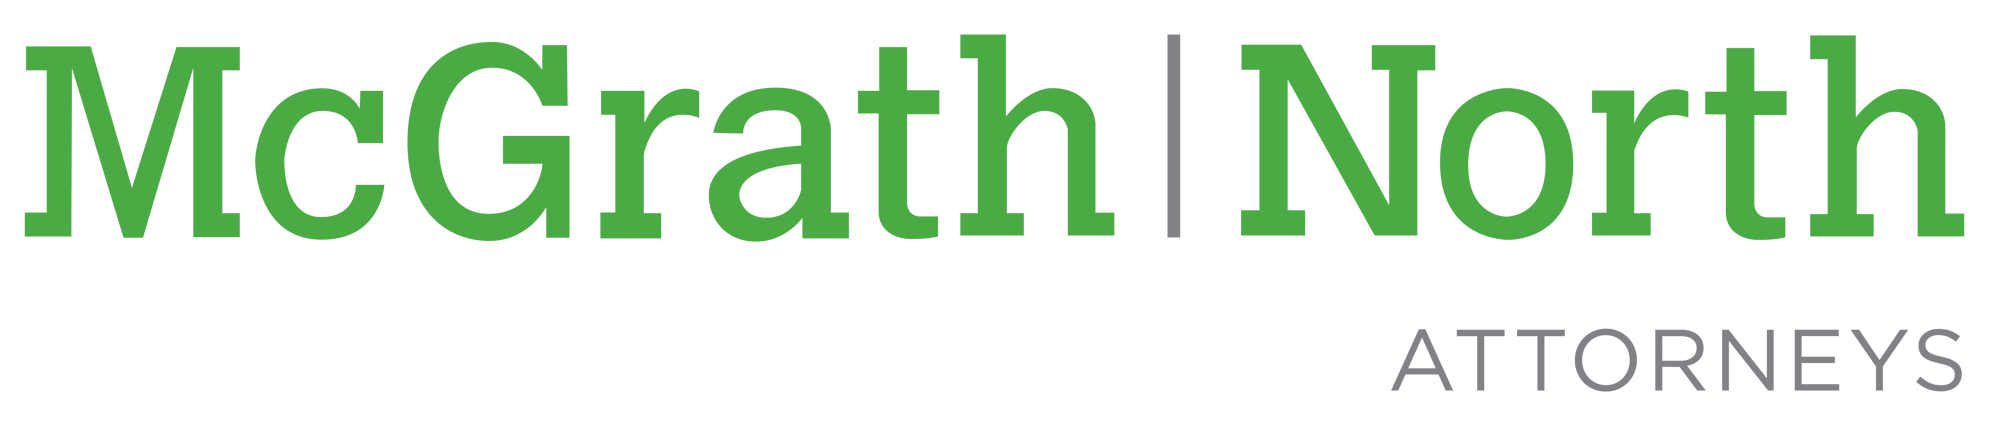 McGrath North Attorneys logo-01